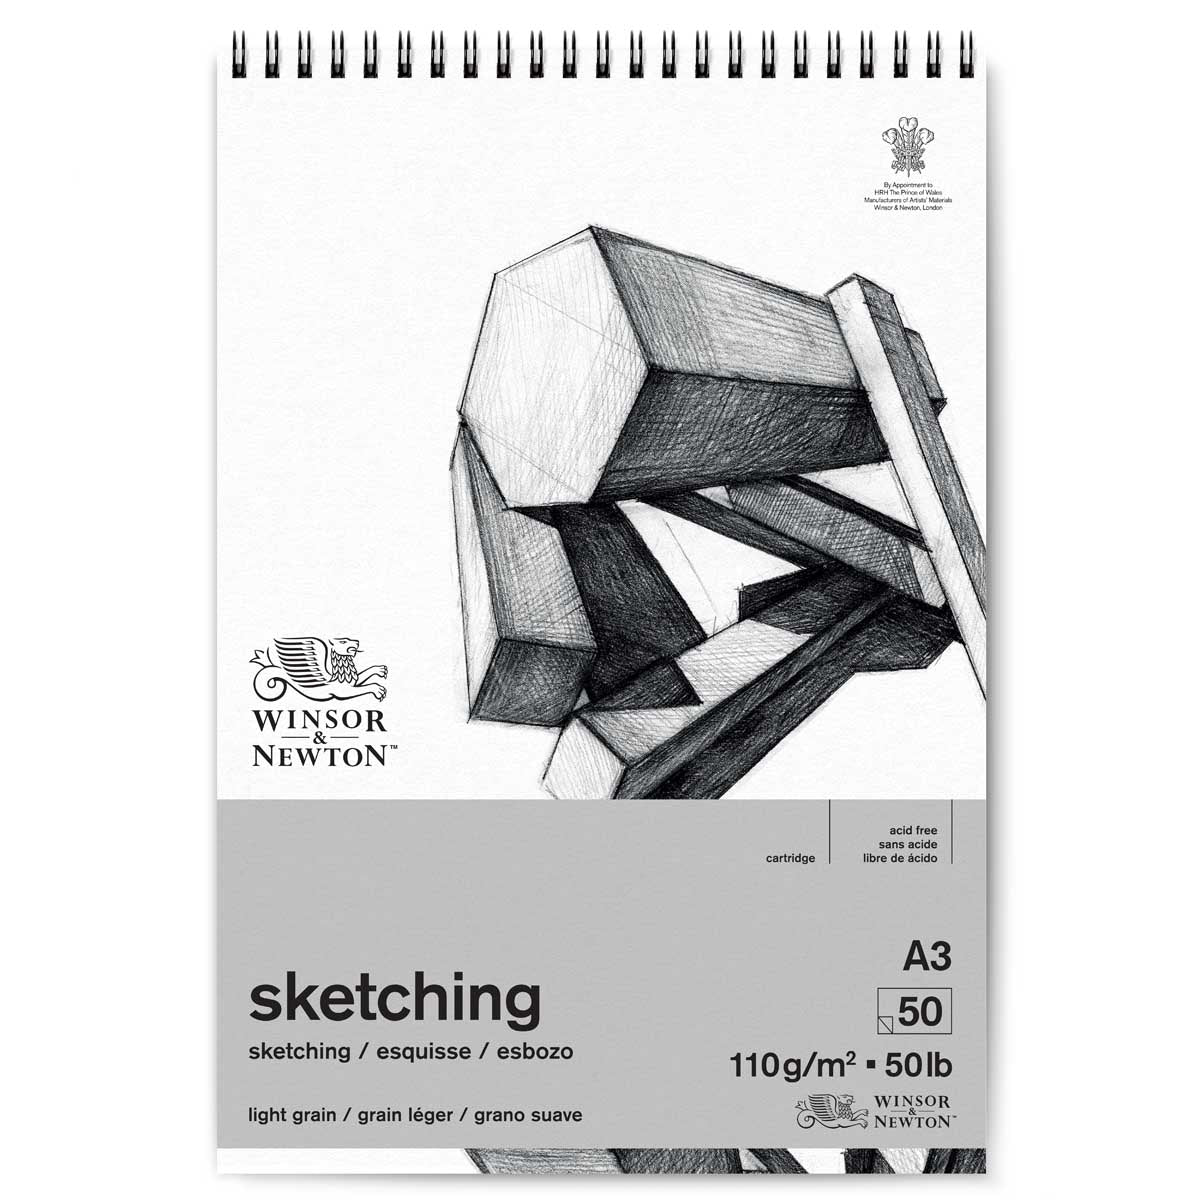 Winsor and Newton - Cartridge 110g Sketch Pad 50 Sheet - A3